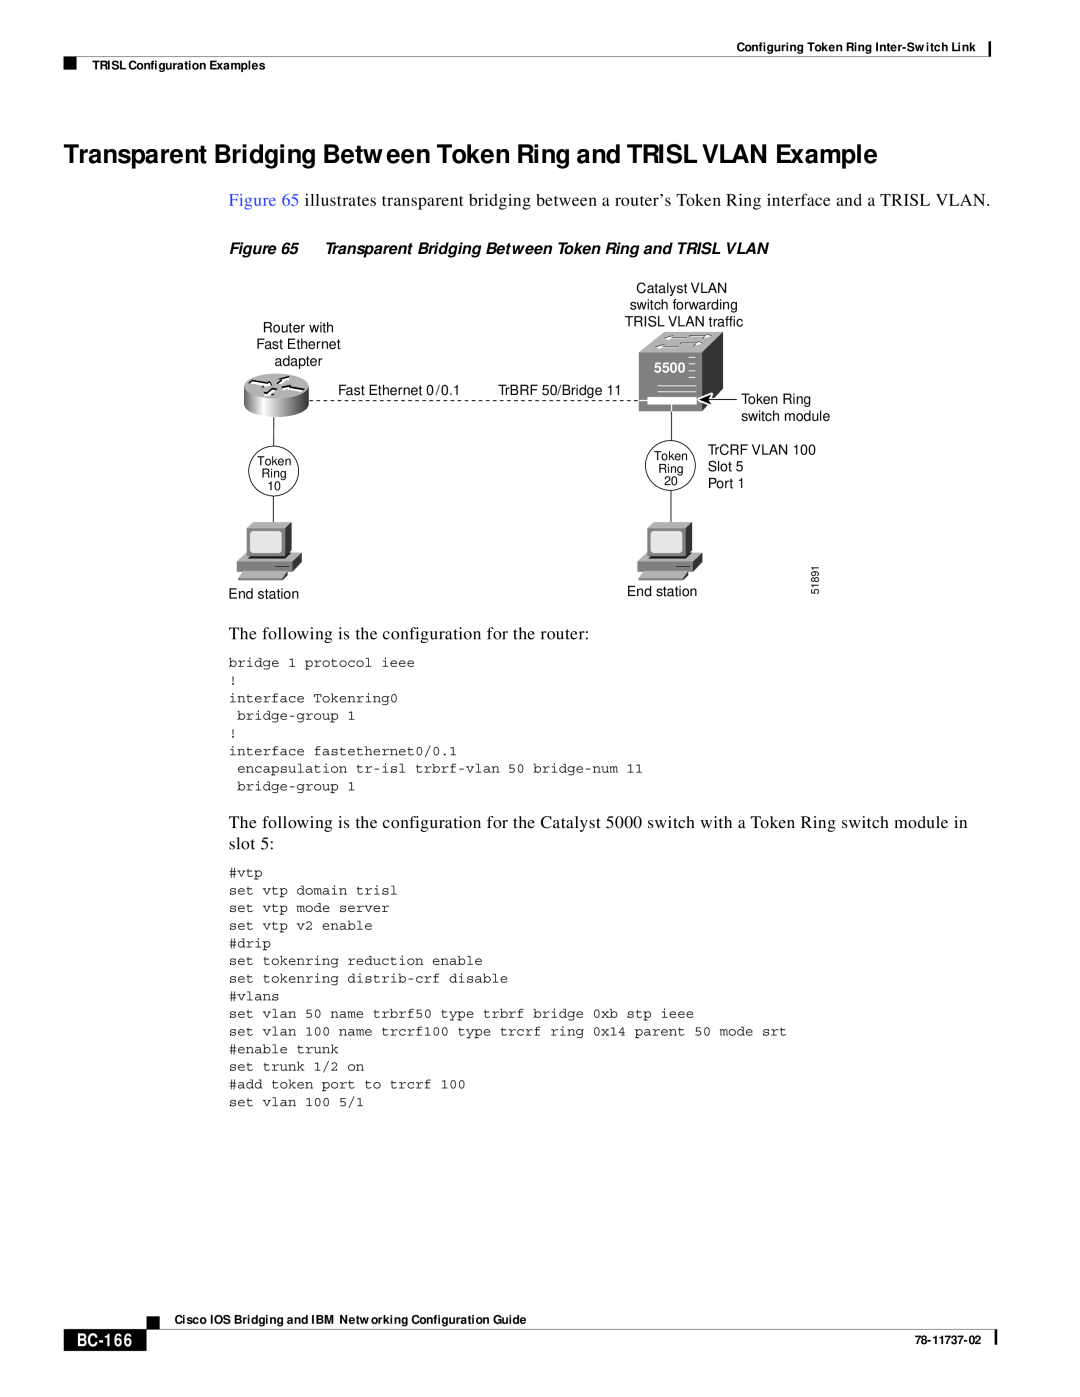 Cisco Systems BC-145 manual Transparent Bridging Between Token Ring and TRISL VLAN Example, BC-166 